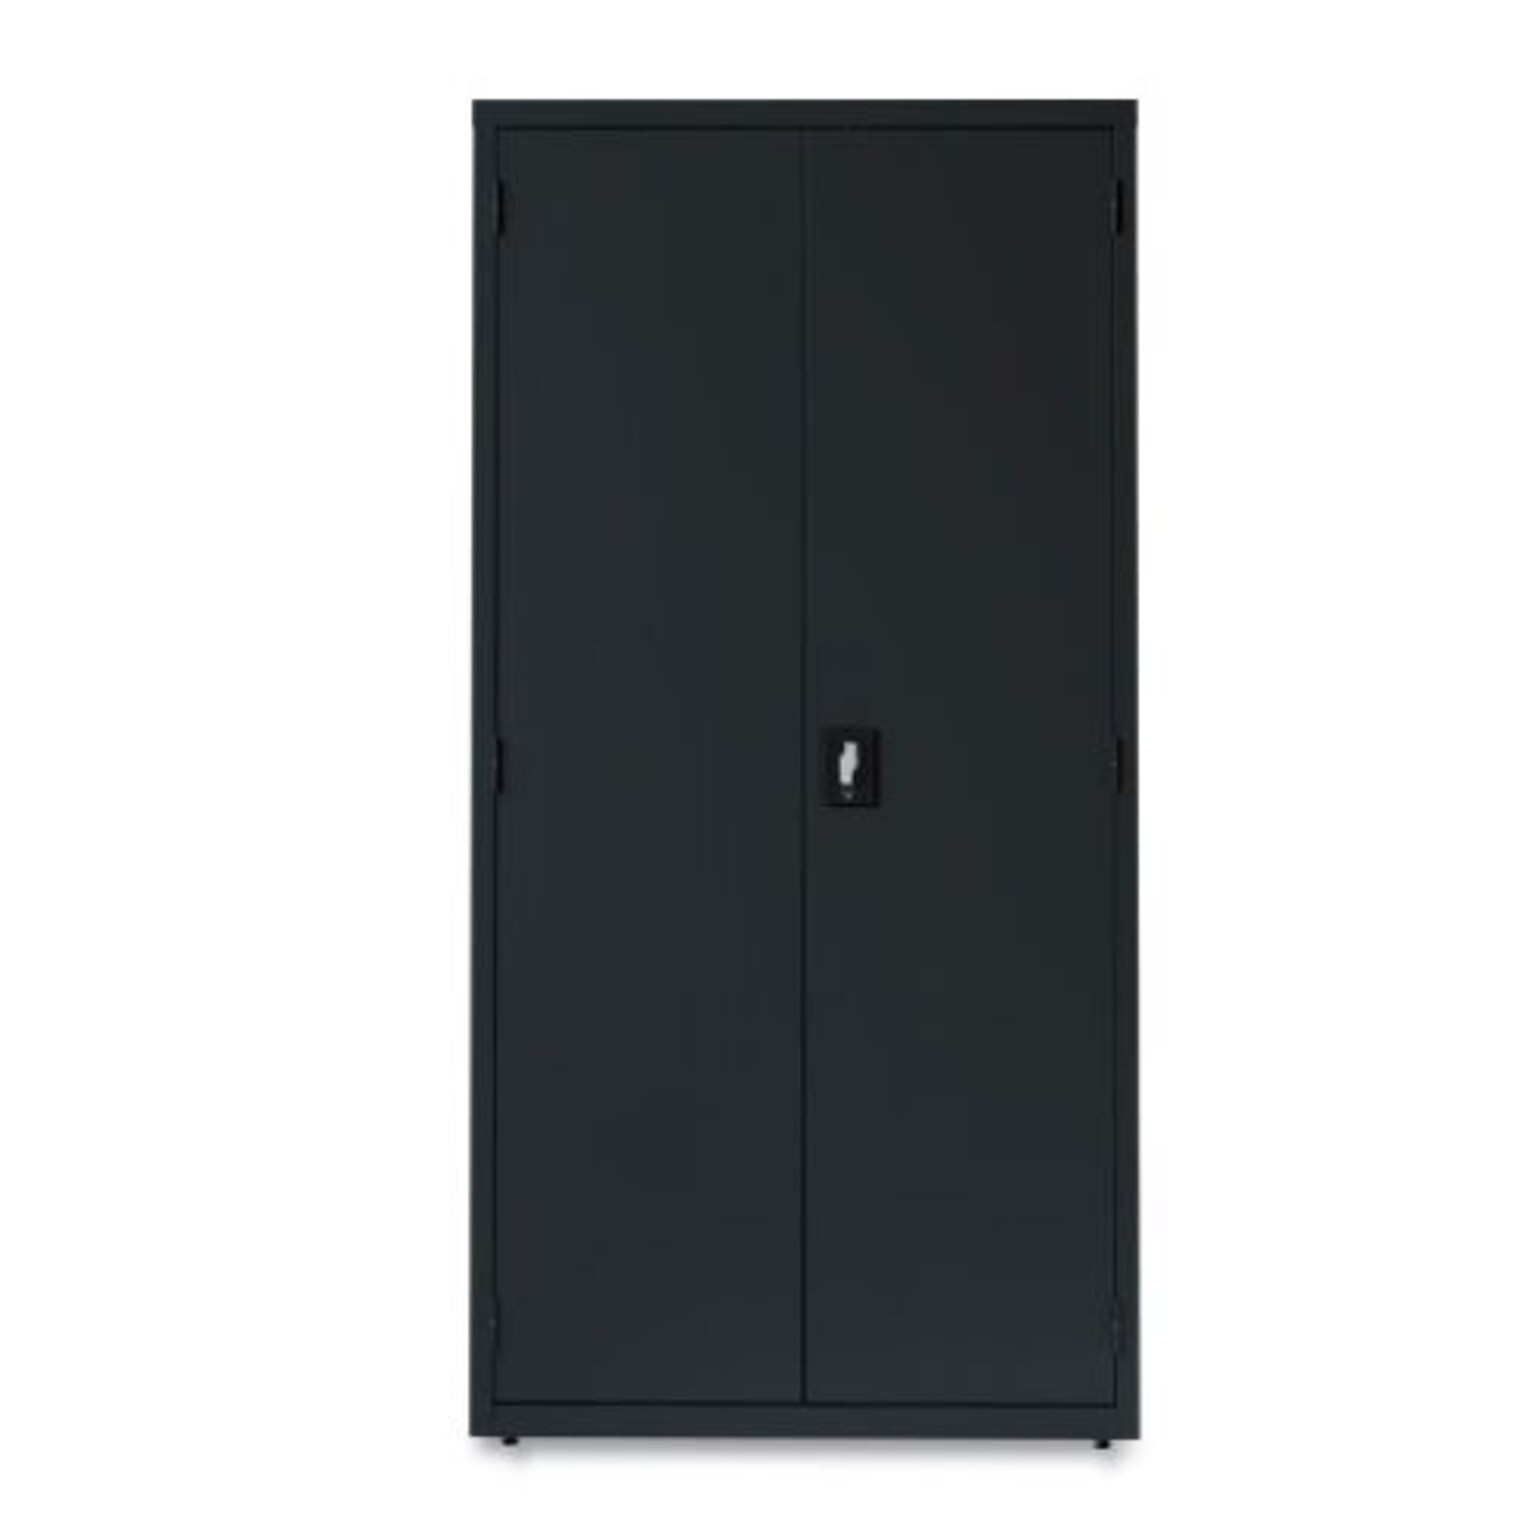 OIF 72H Steel Storage Cabinet with 5 Shelves, Black (CM7218BK)